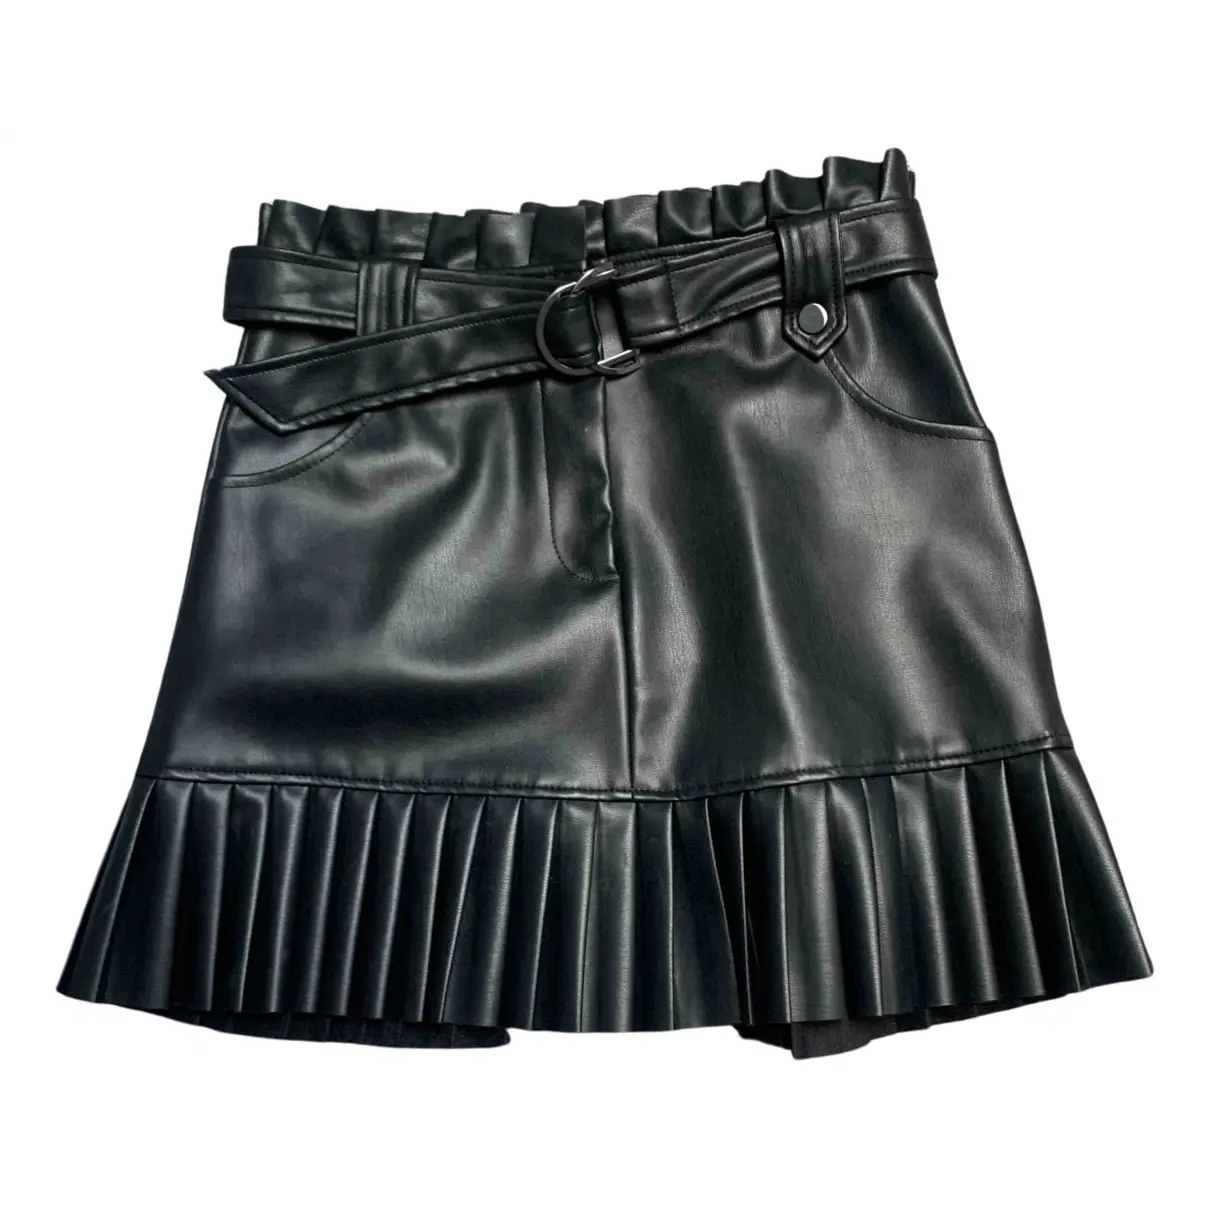 Patent leather mini skirt Zara